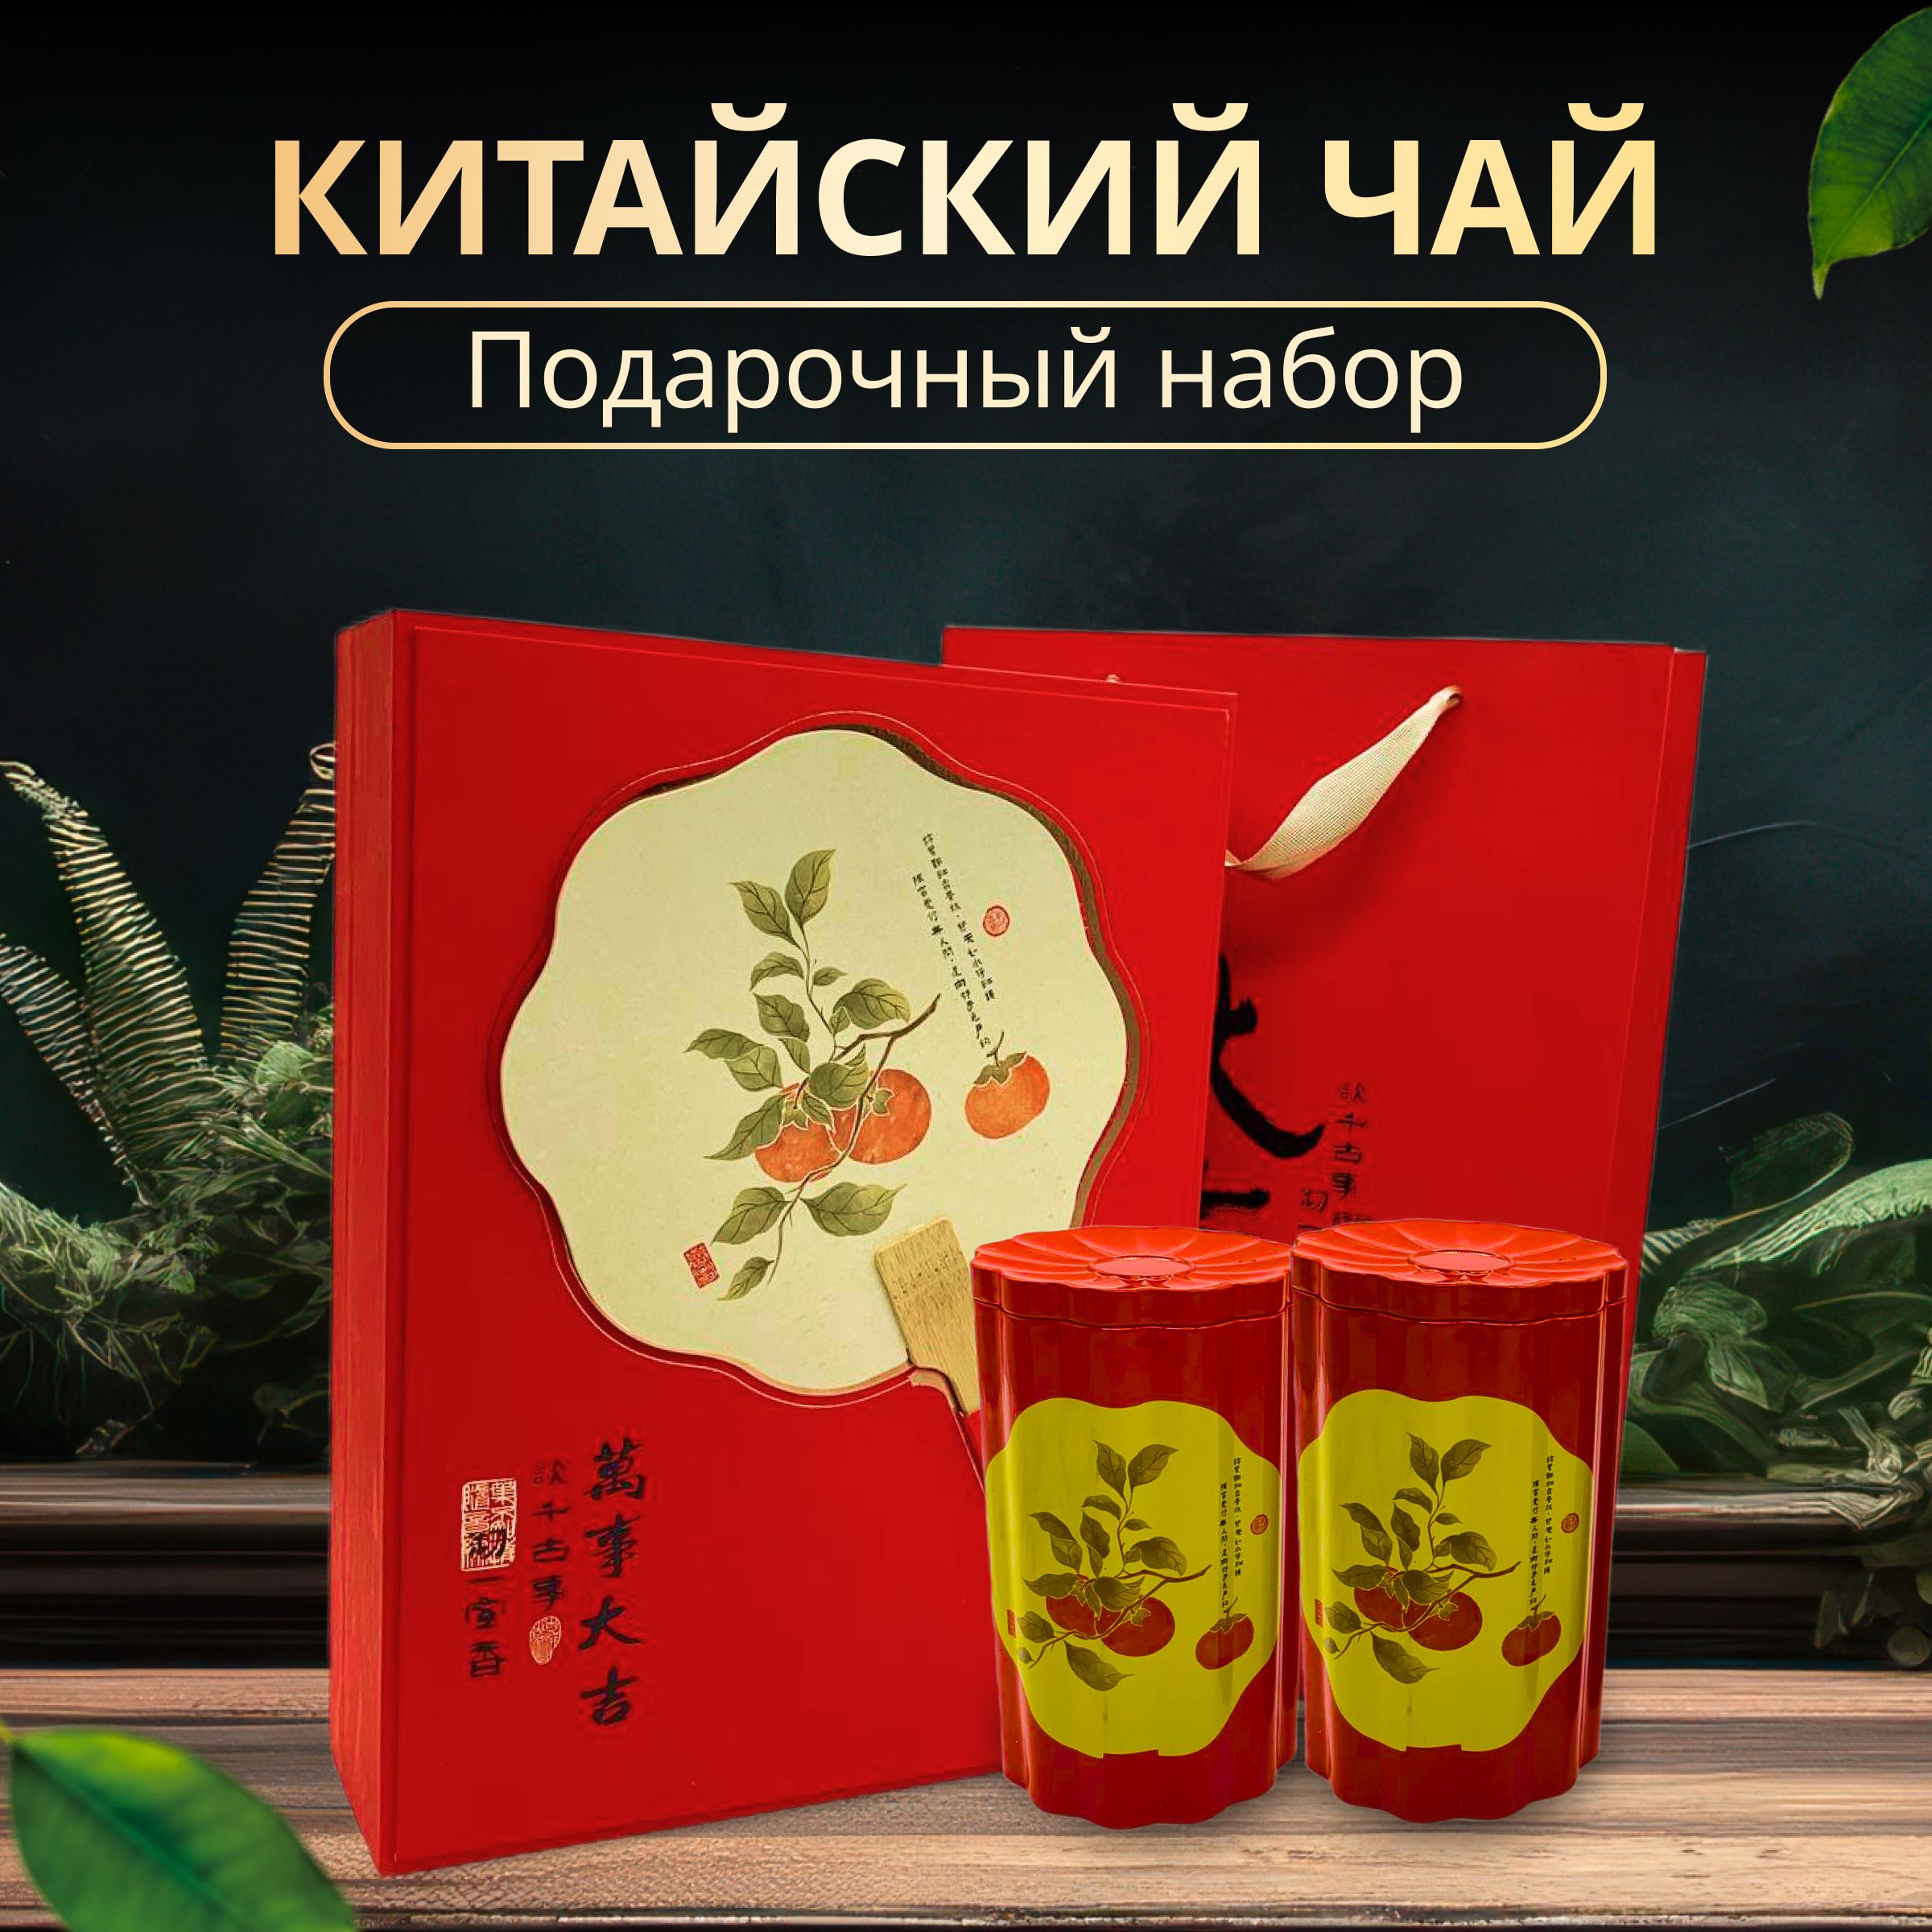 Подарочный набор Fantasy Earth китайского чая Цзинь Цзюнь Мэй с веером